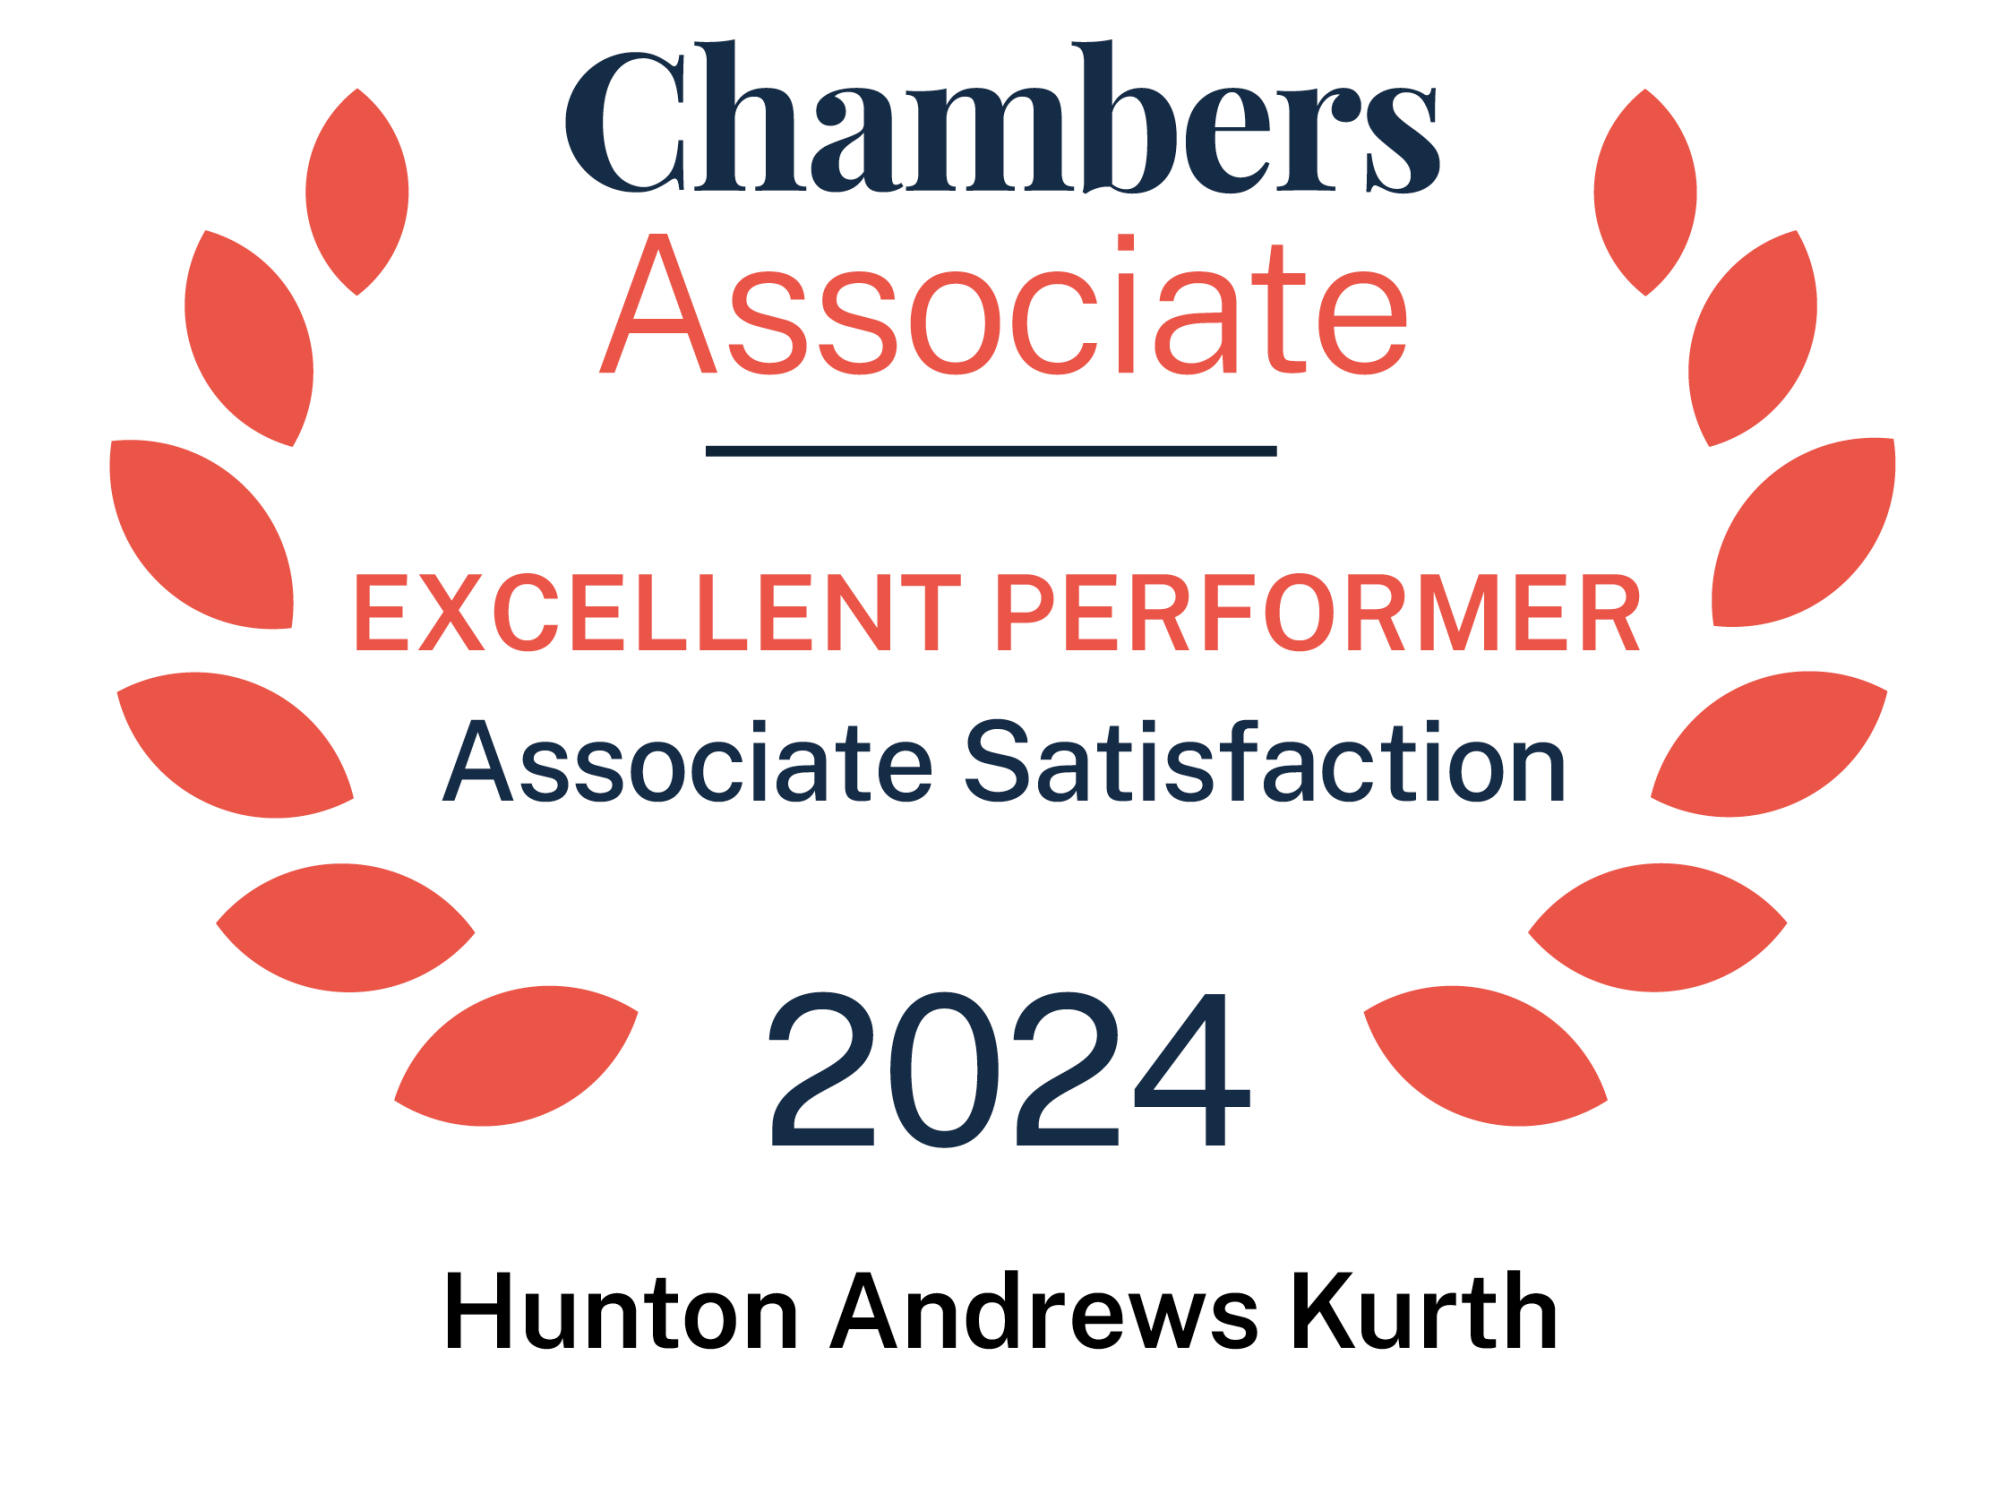 Chambers Associate Excellent Performer: Associate Satisfaction 2024